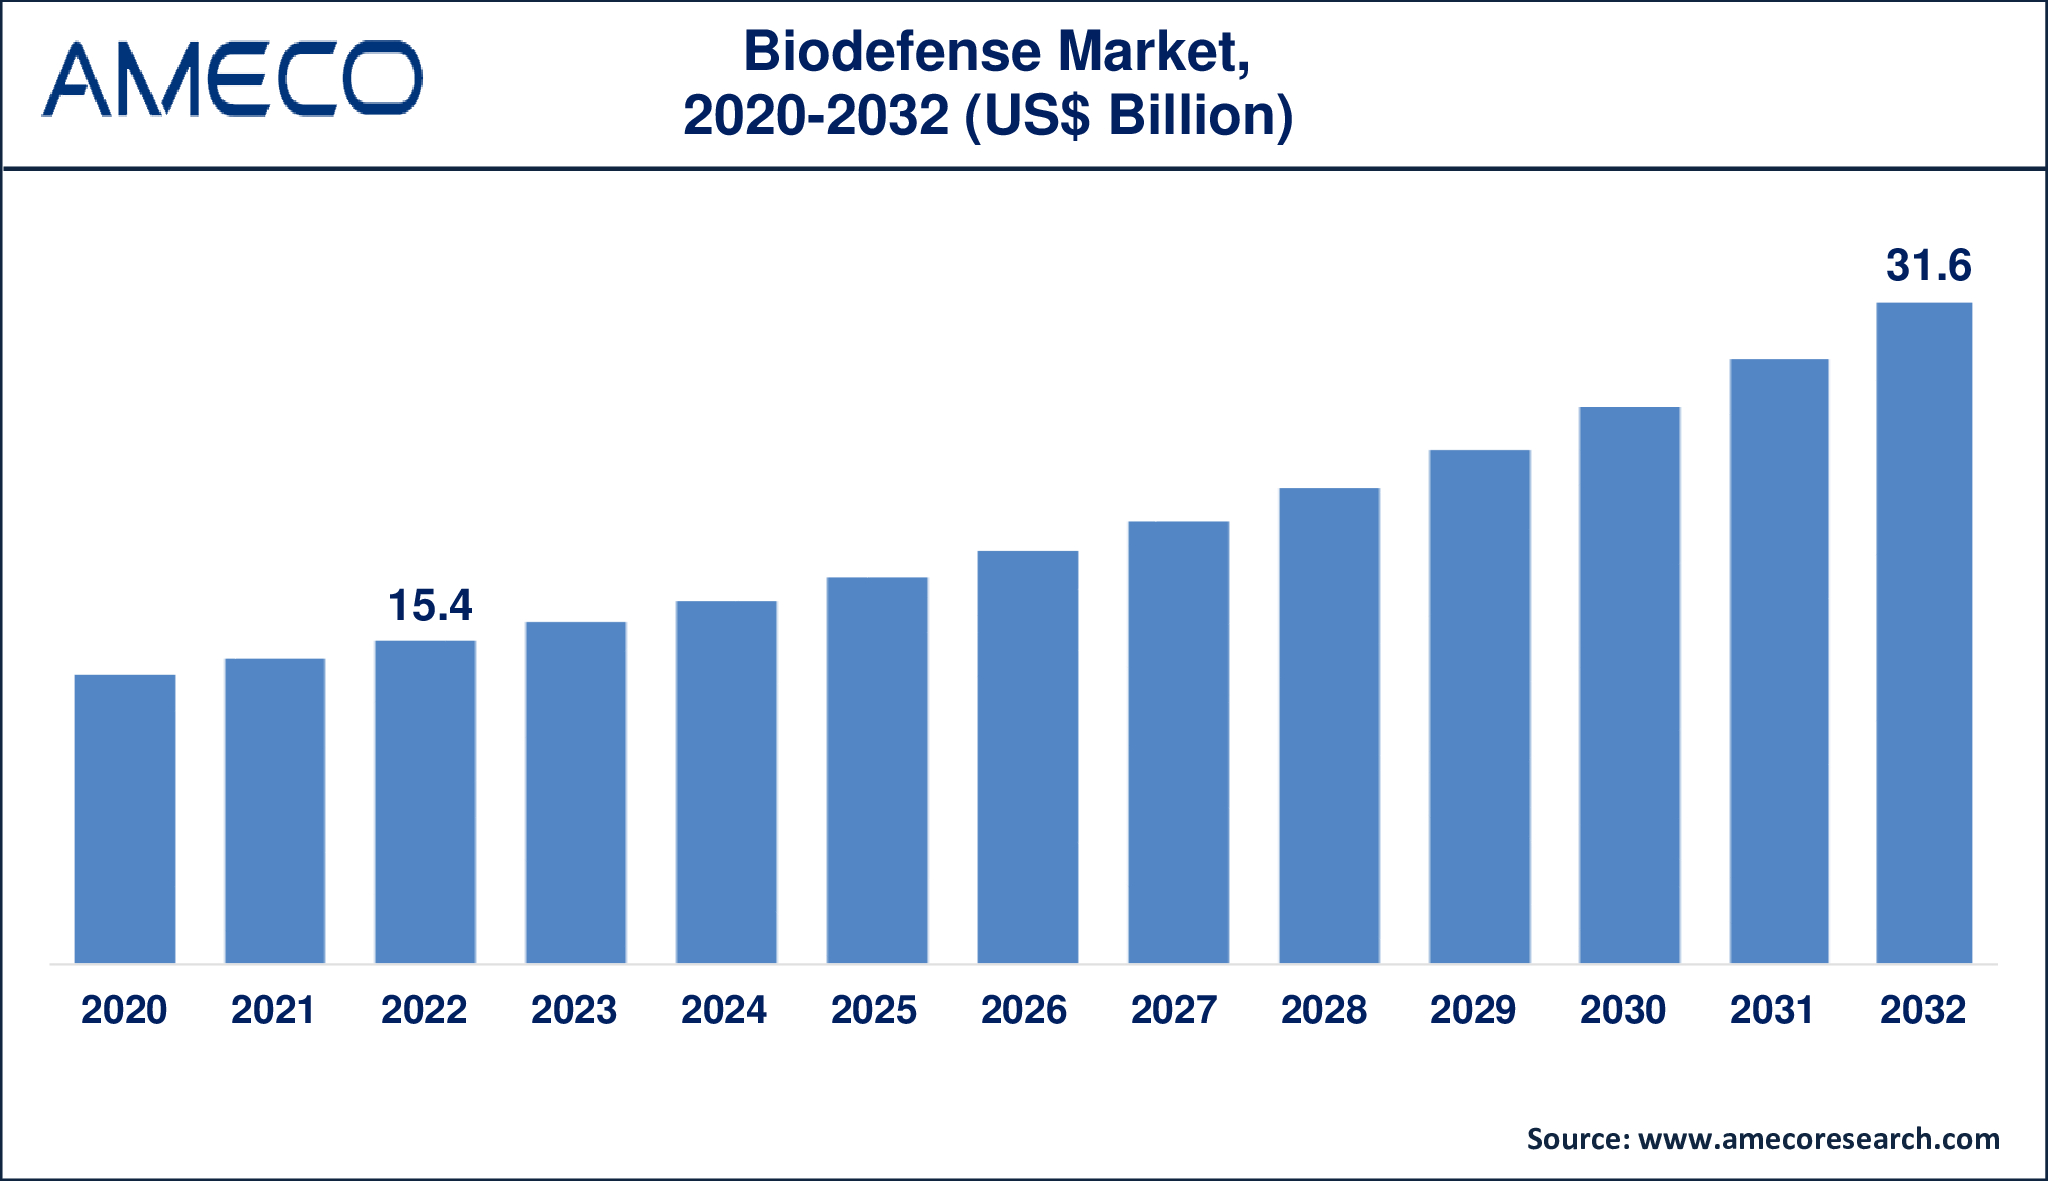 Biodefense Market Dynamics